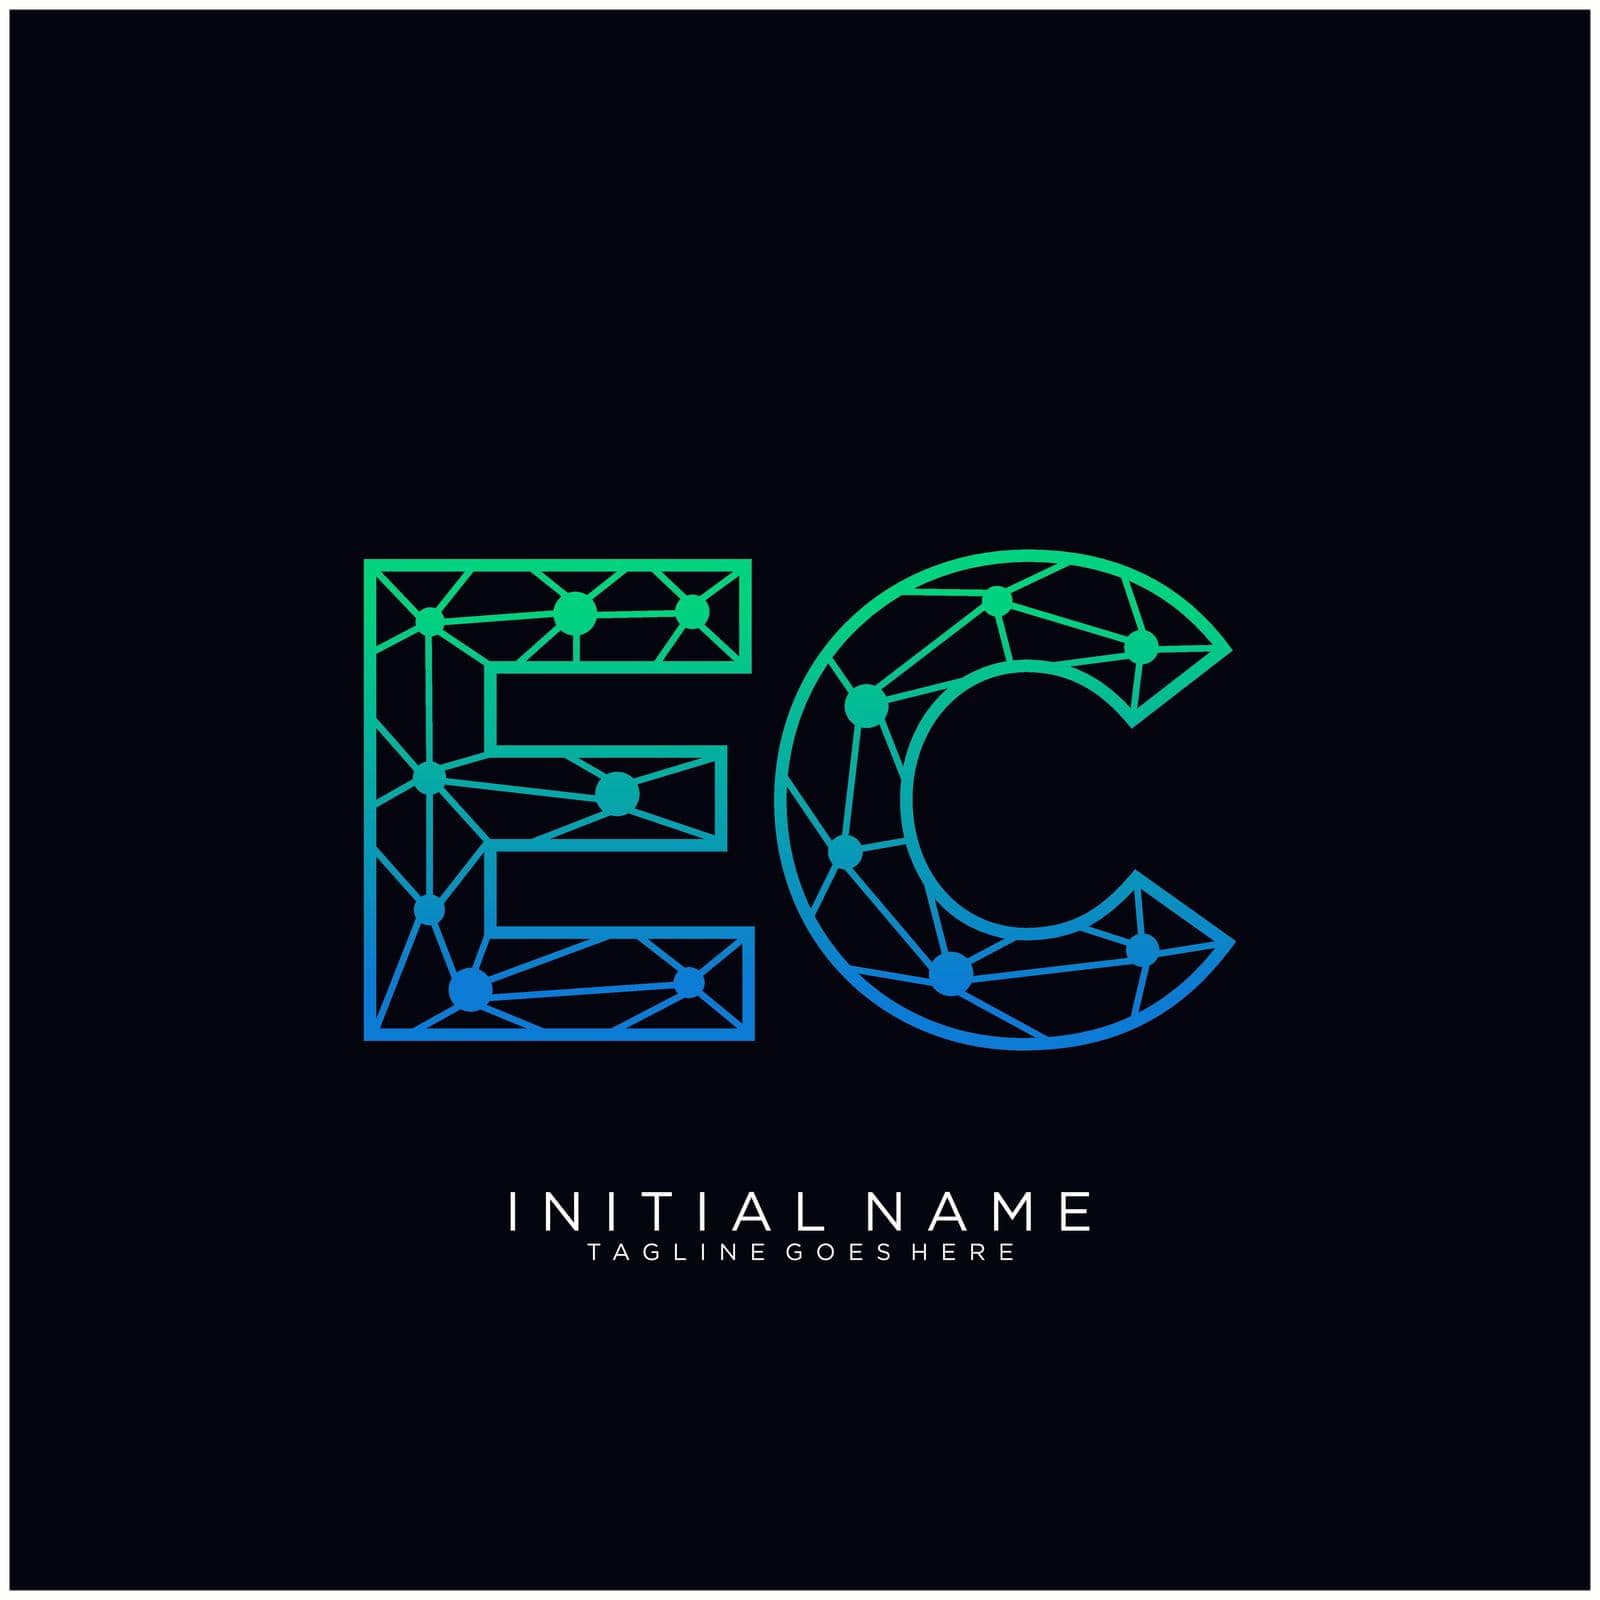 EC Letter logo icon design template elements by liaanniesatul